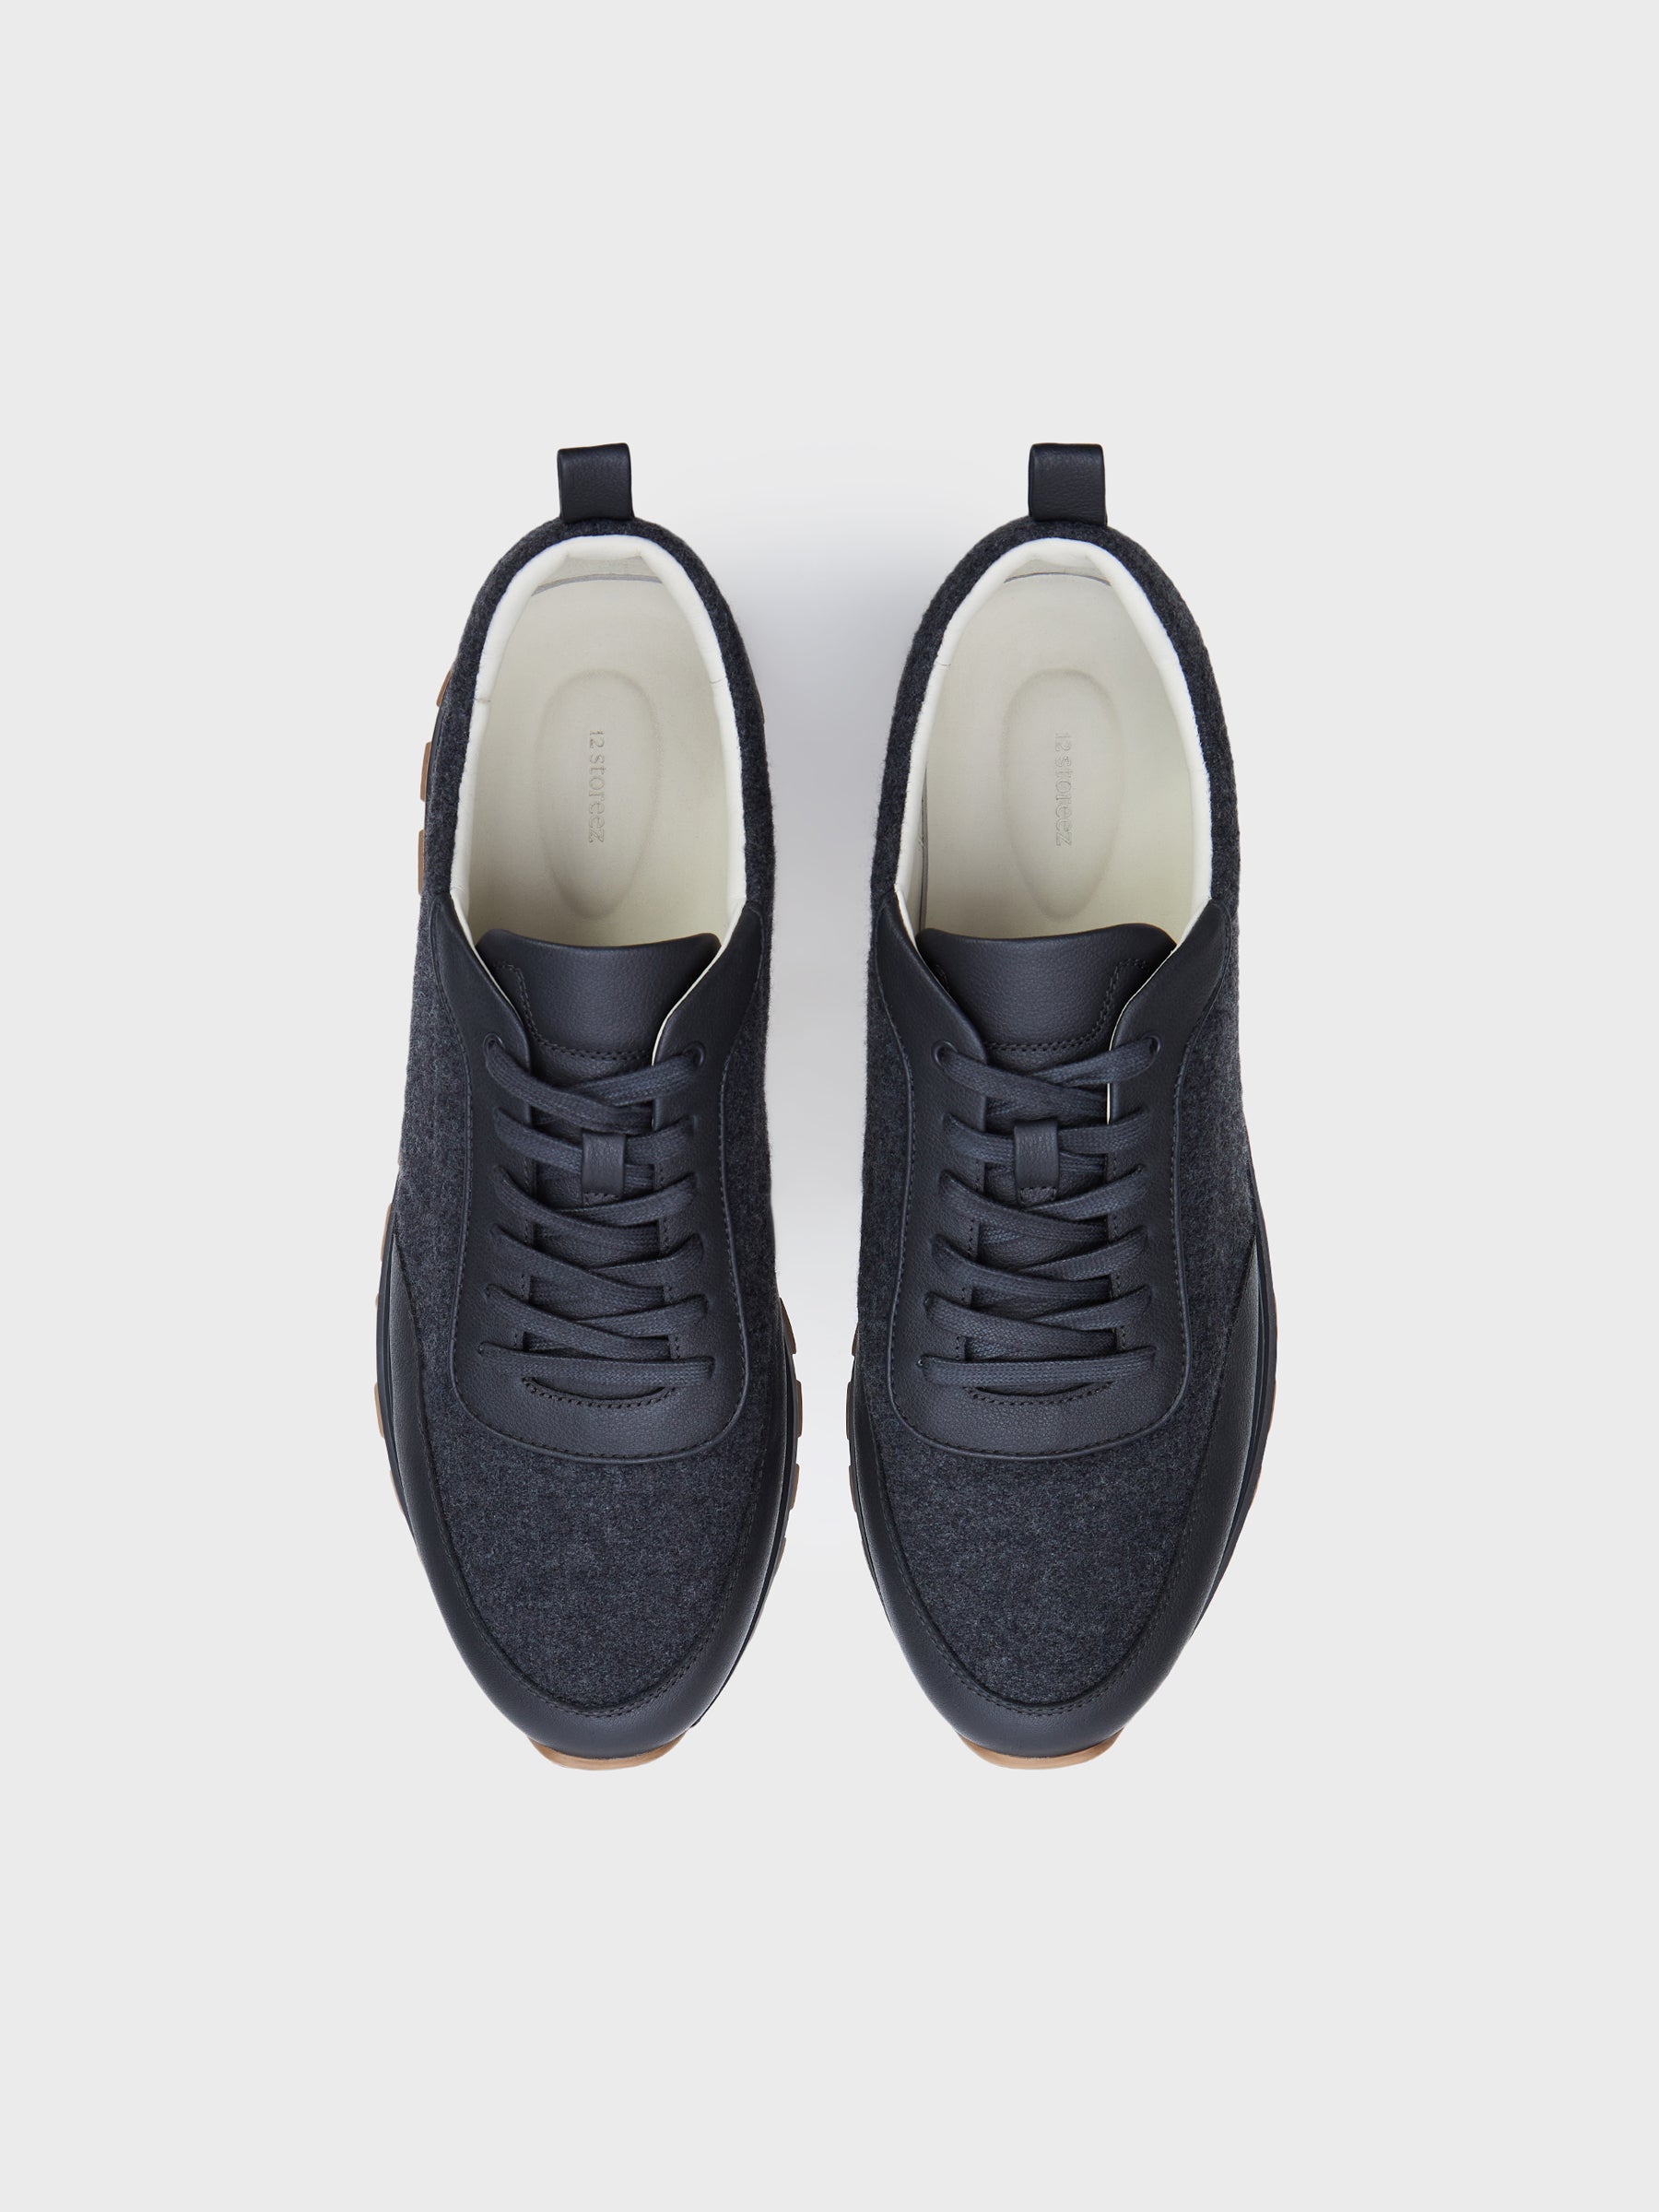 Wool-leather sneakers